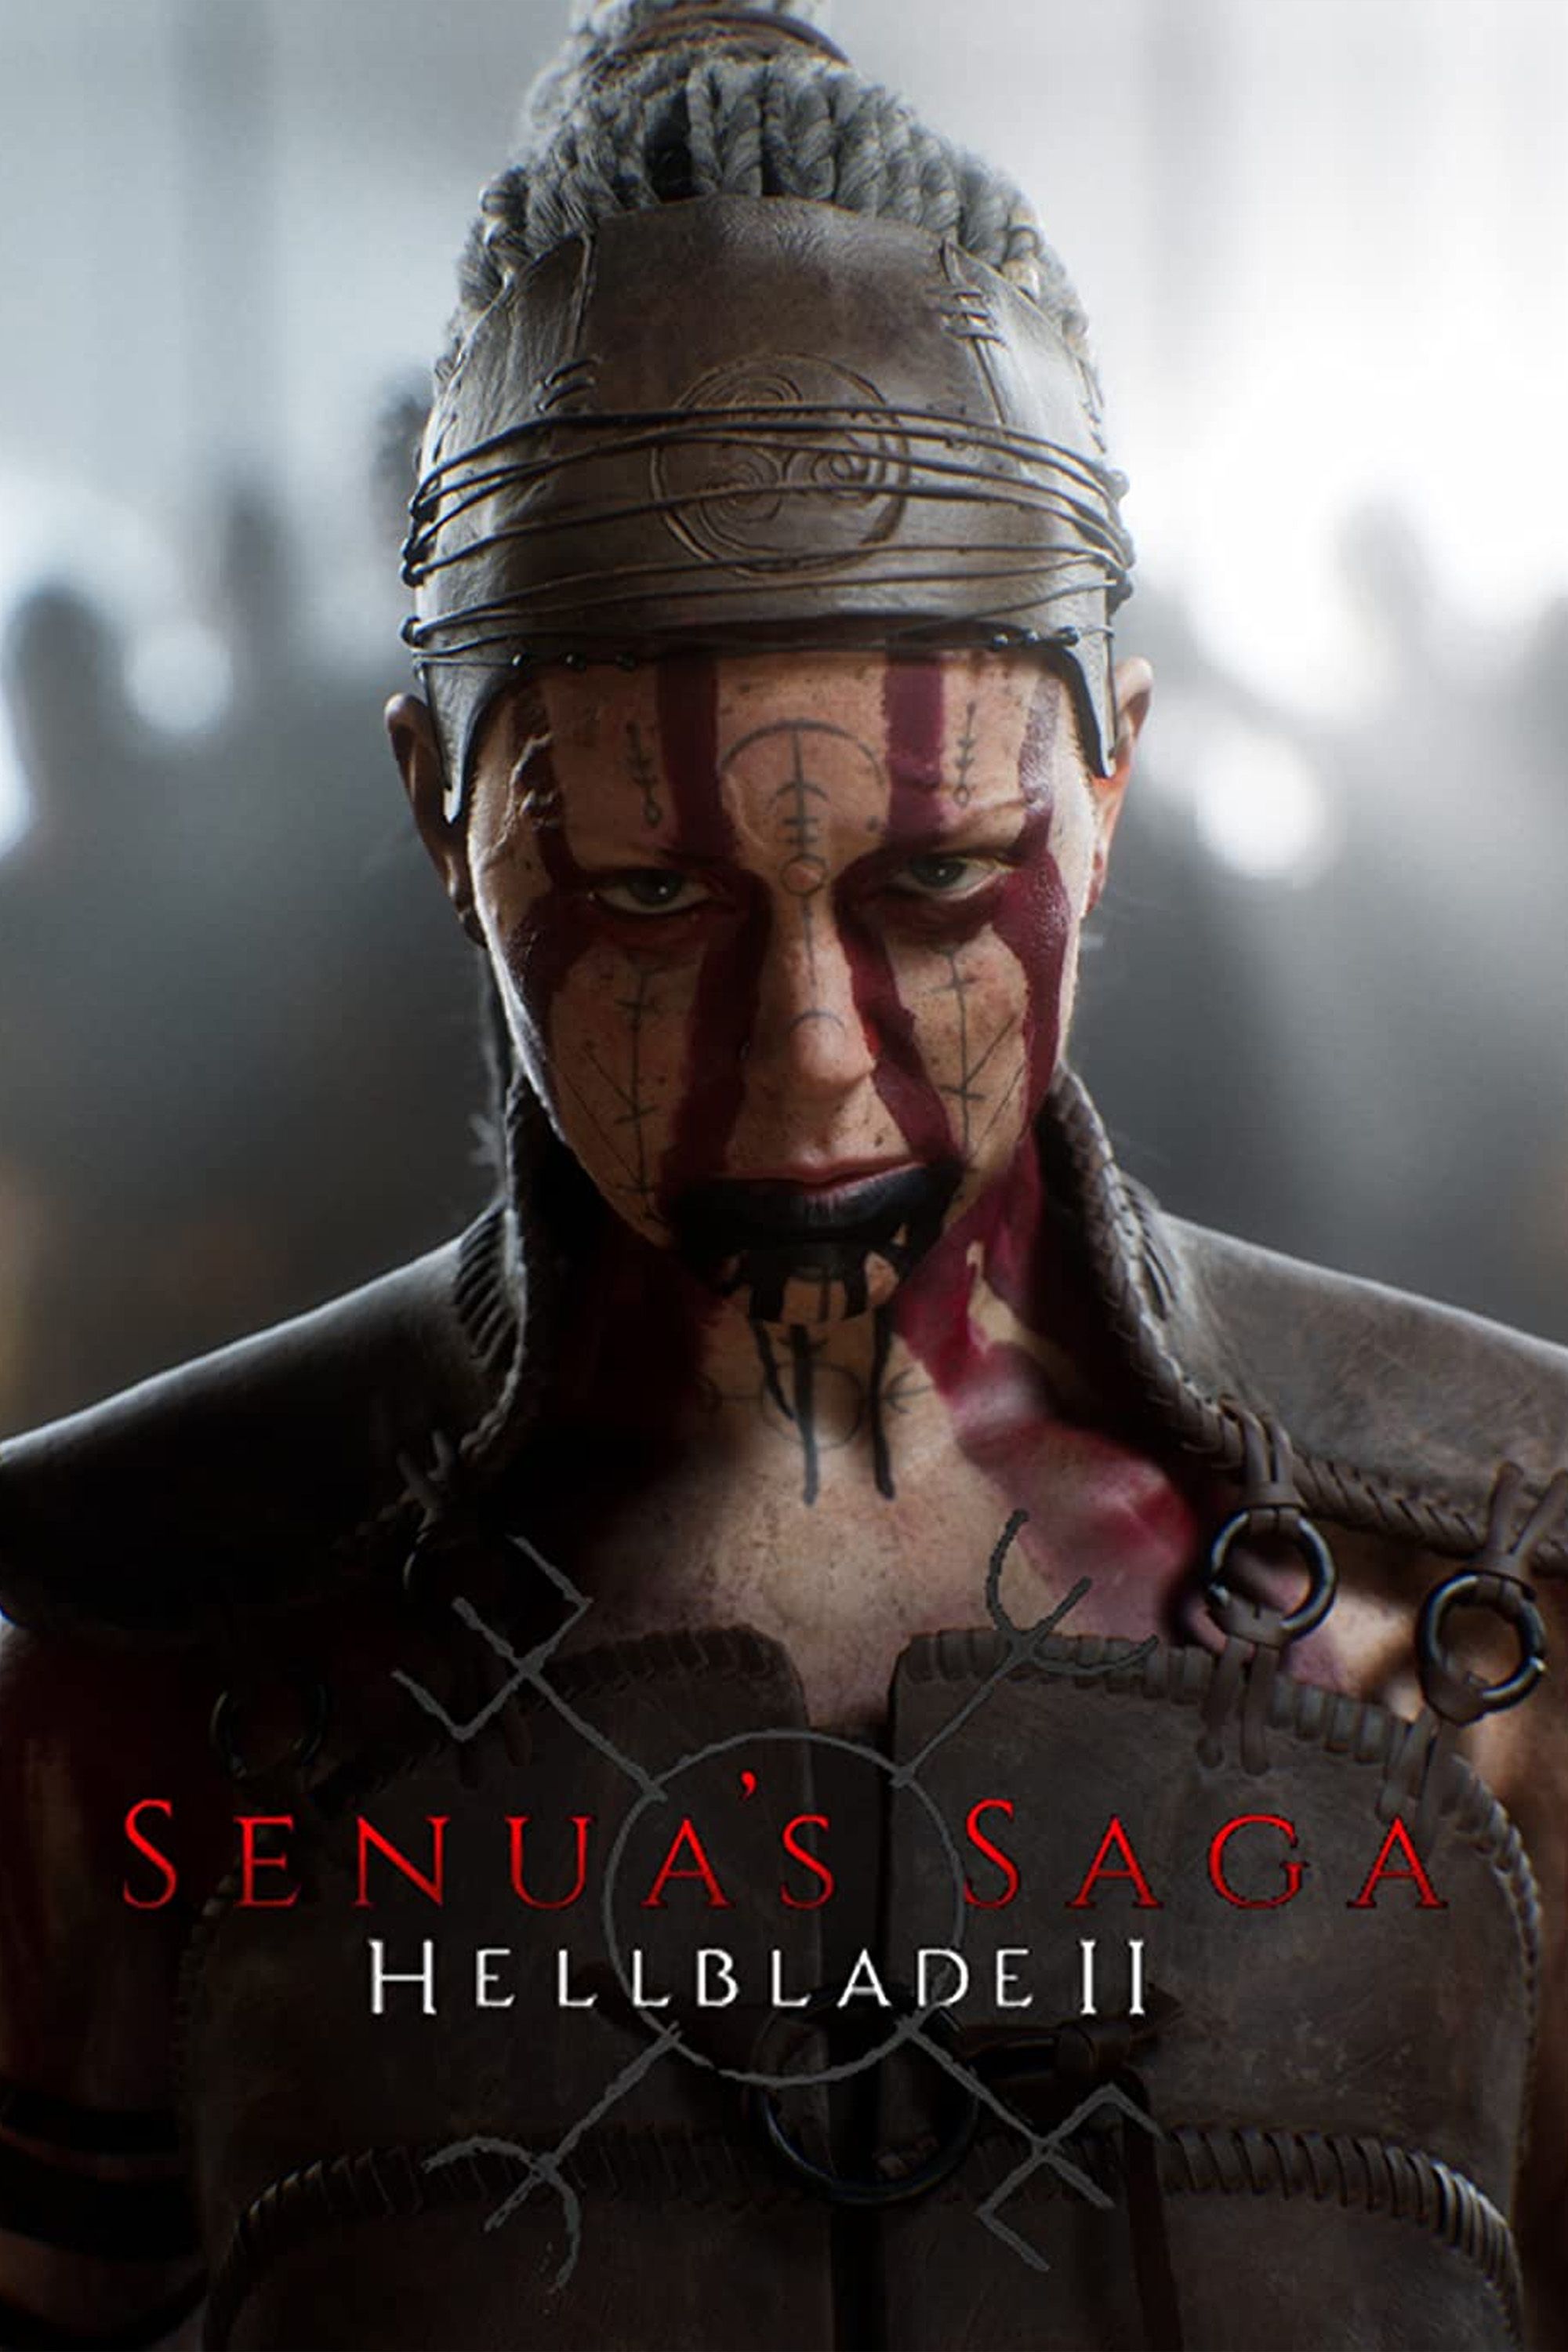 Senua's Saga: Hellblade 2 has wrapped shooting, coming next year